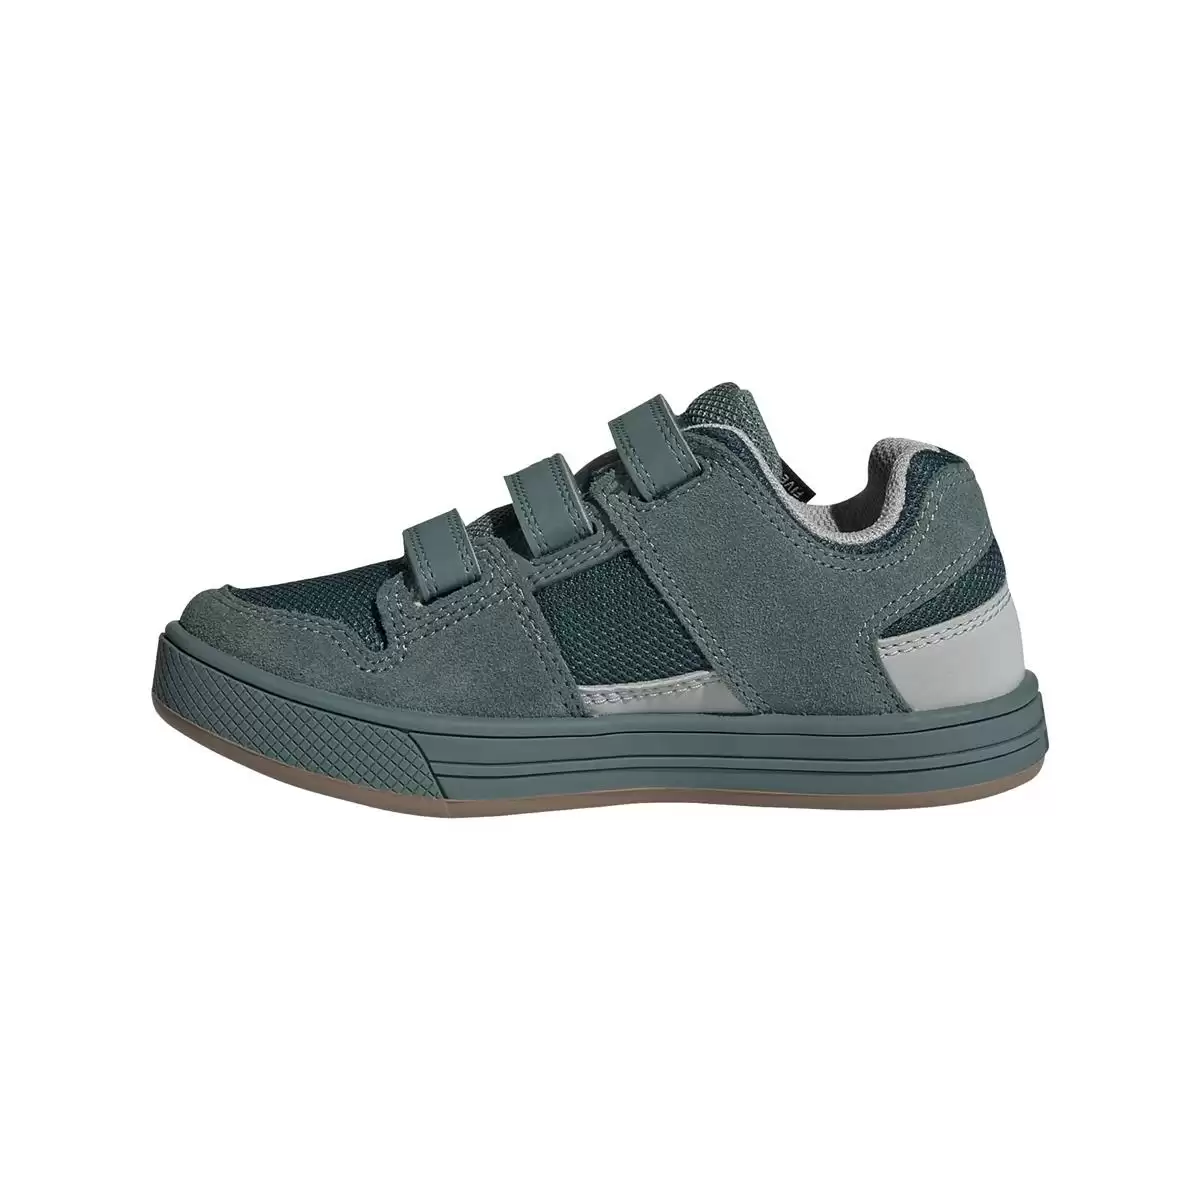 MTB Flat Shoes Freerider Kids VCS Junior Aqua Size 30 #3